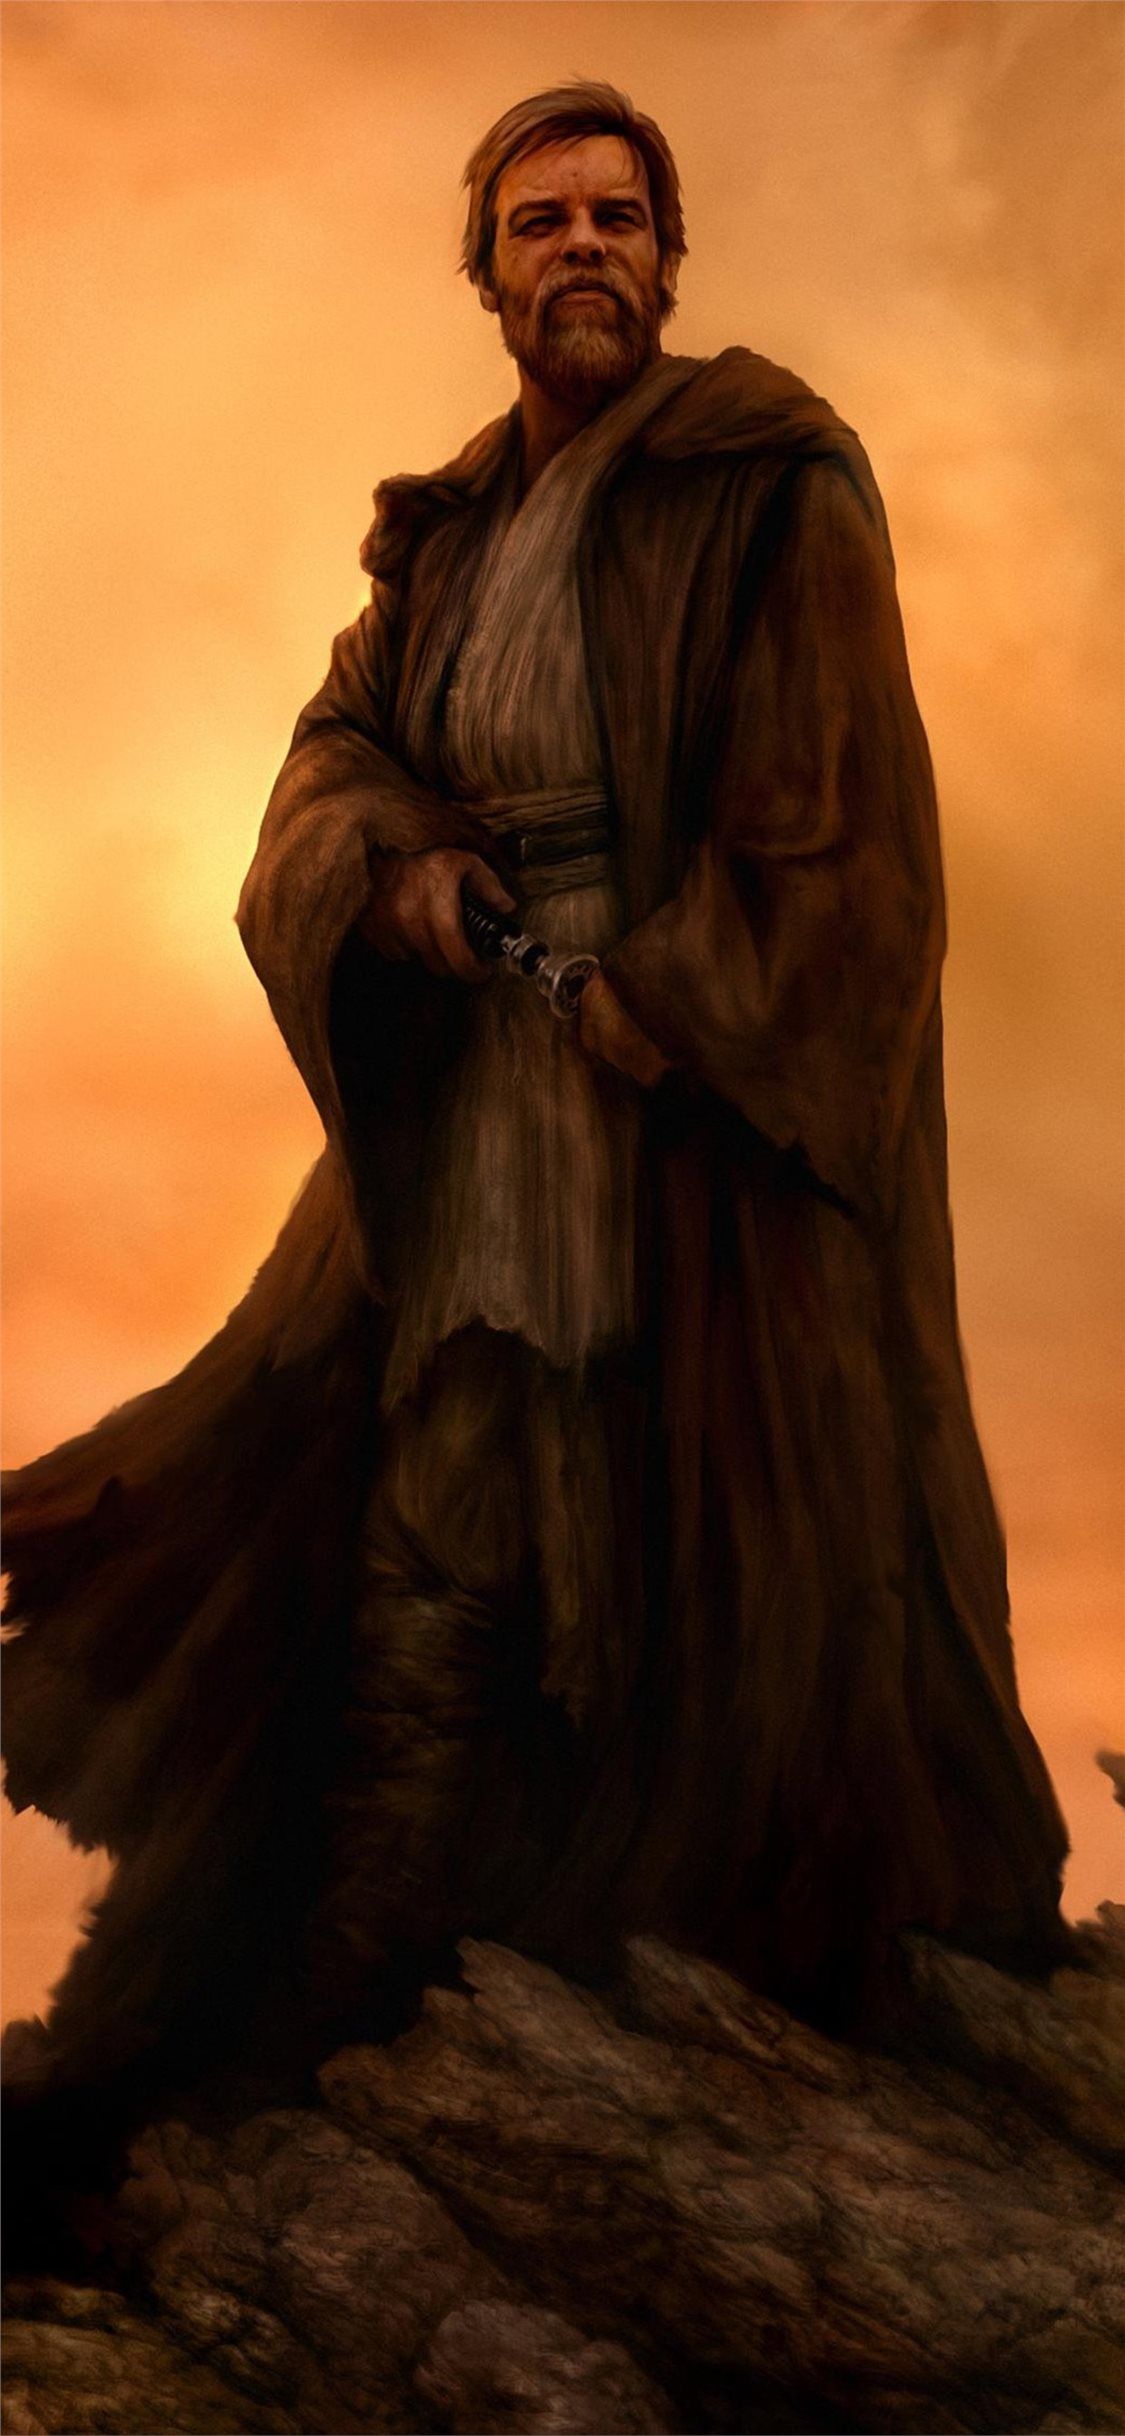 Star Wars Obi Wan Phone Wallpaper